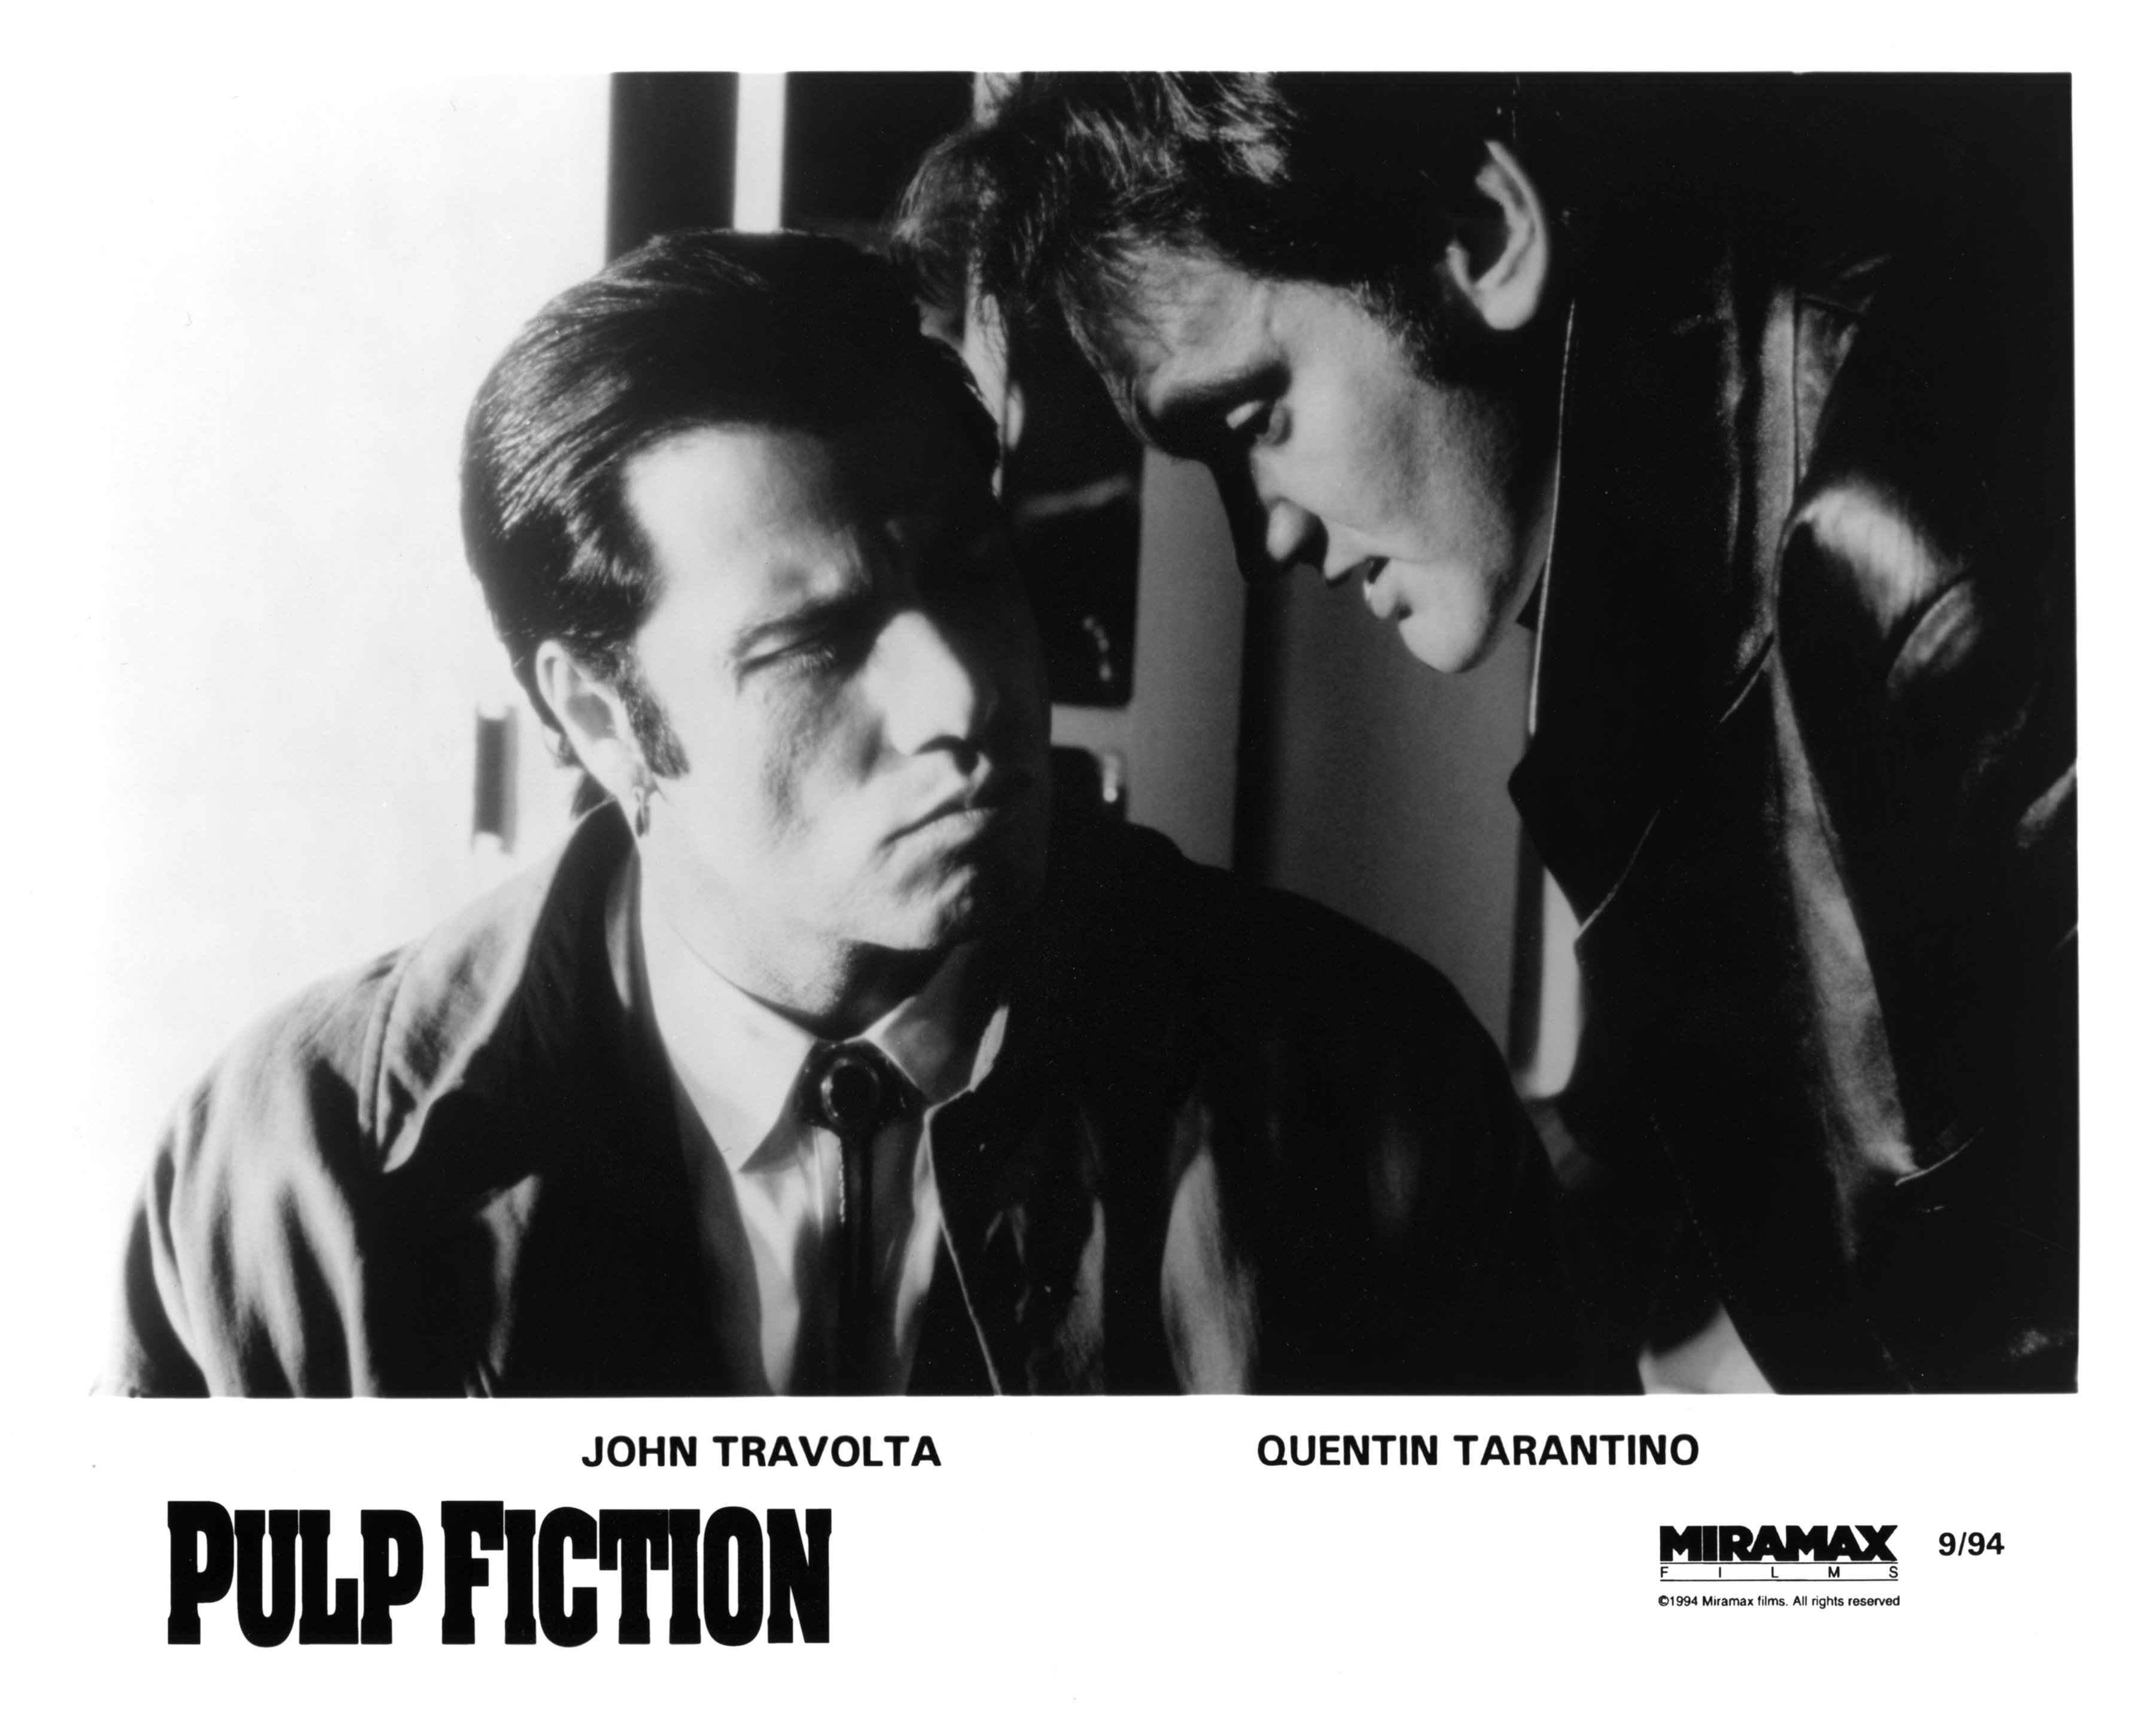 John Travolta and Quentin Tarantino in a still for 'Pulp Fiction'